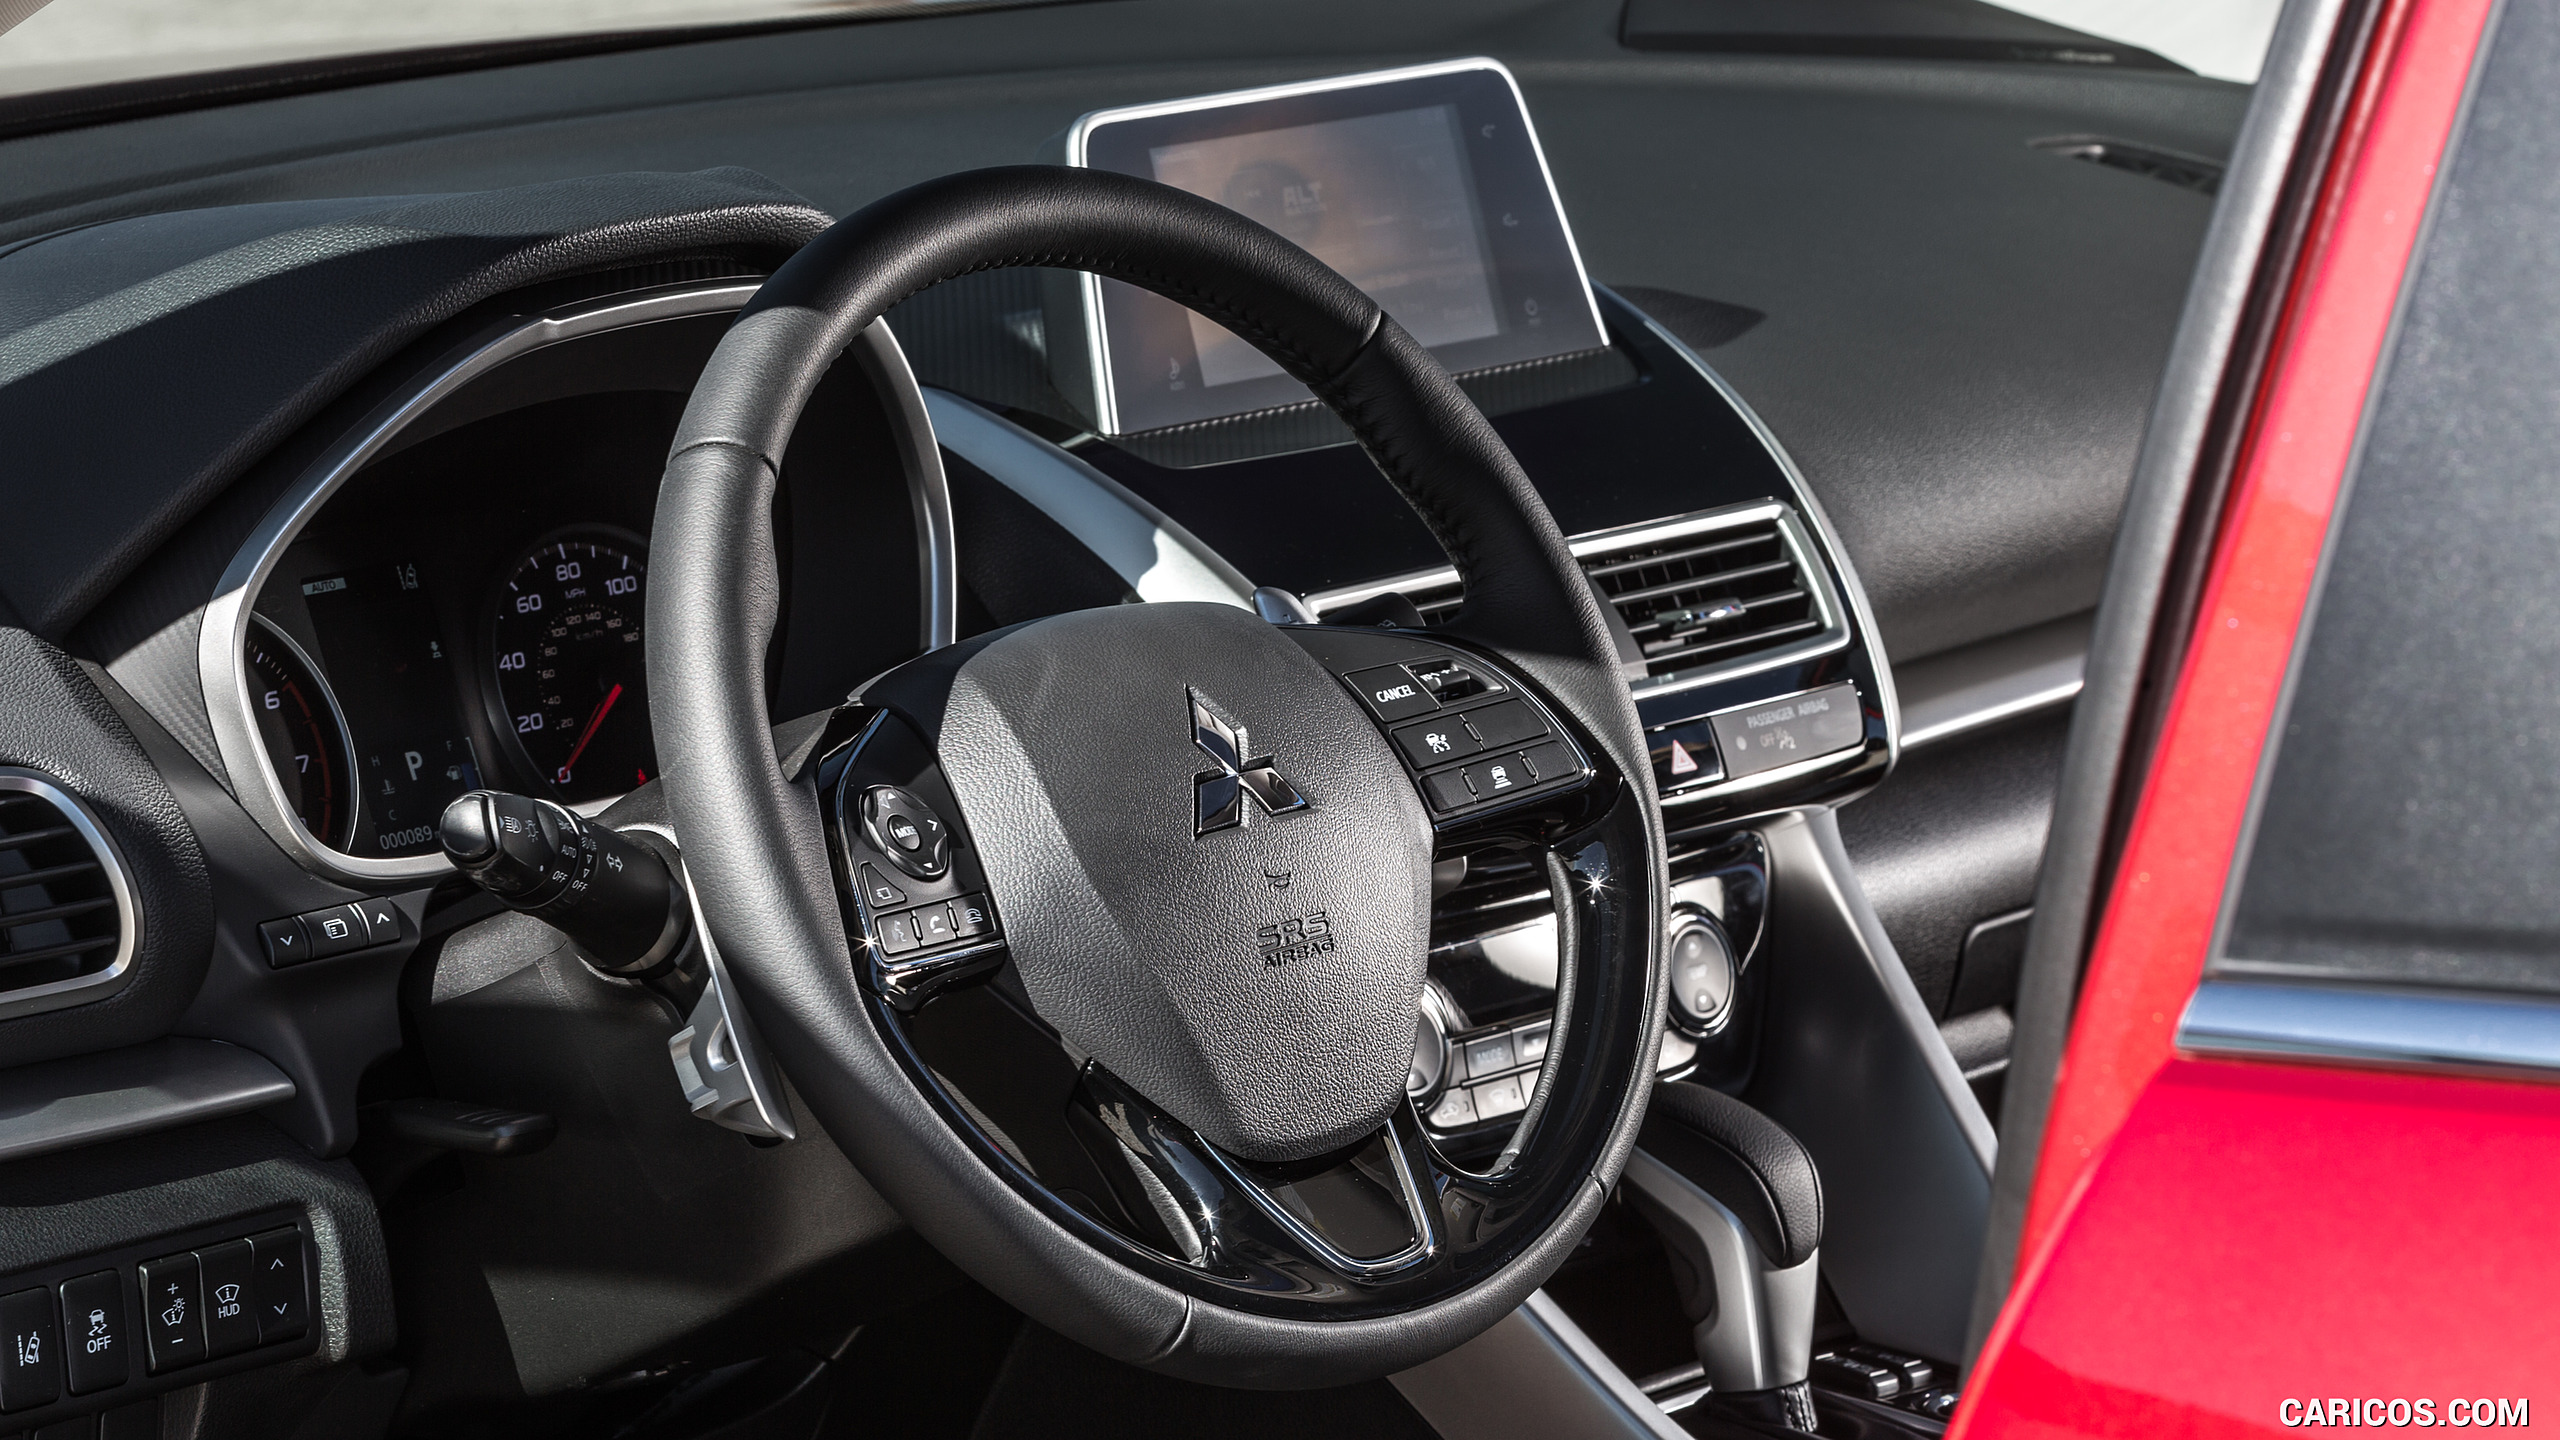 2018 Mitsubishi Eclipse Cross - Interior, Steering Wheel, #106 of 173